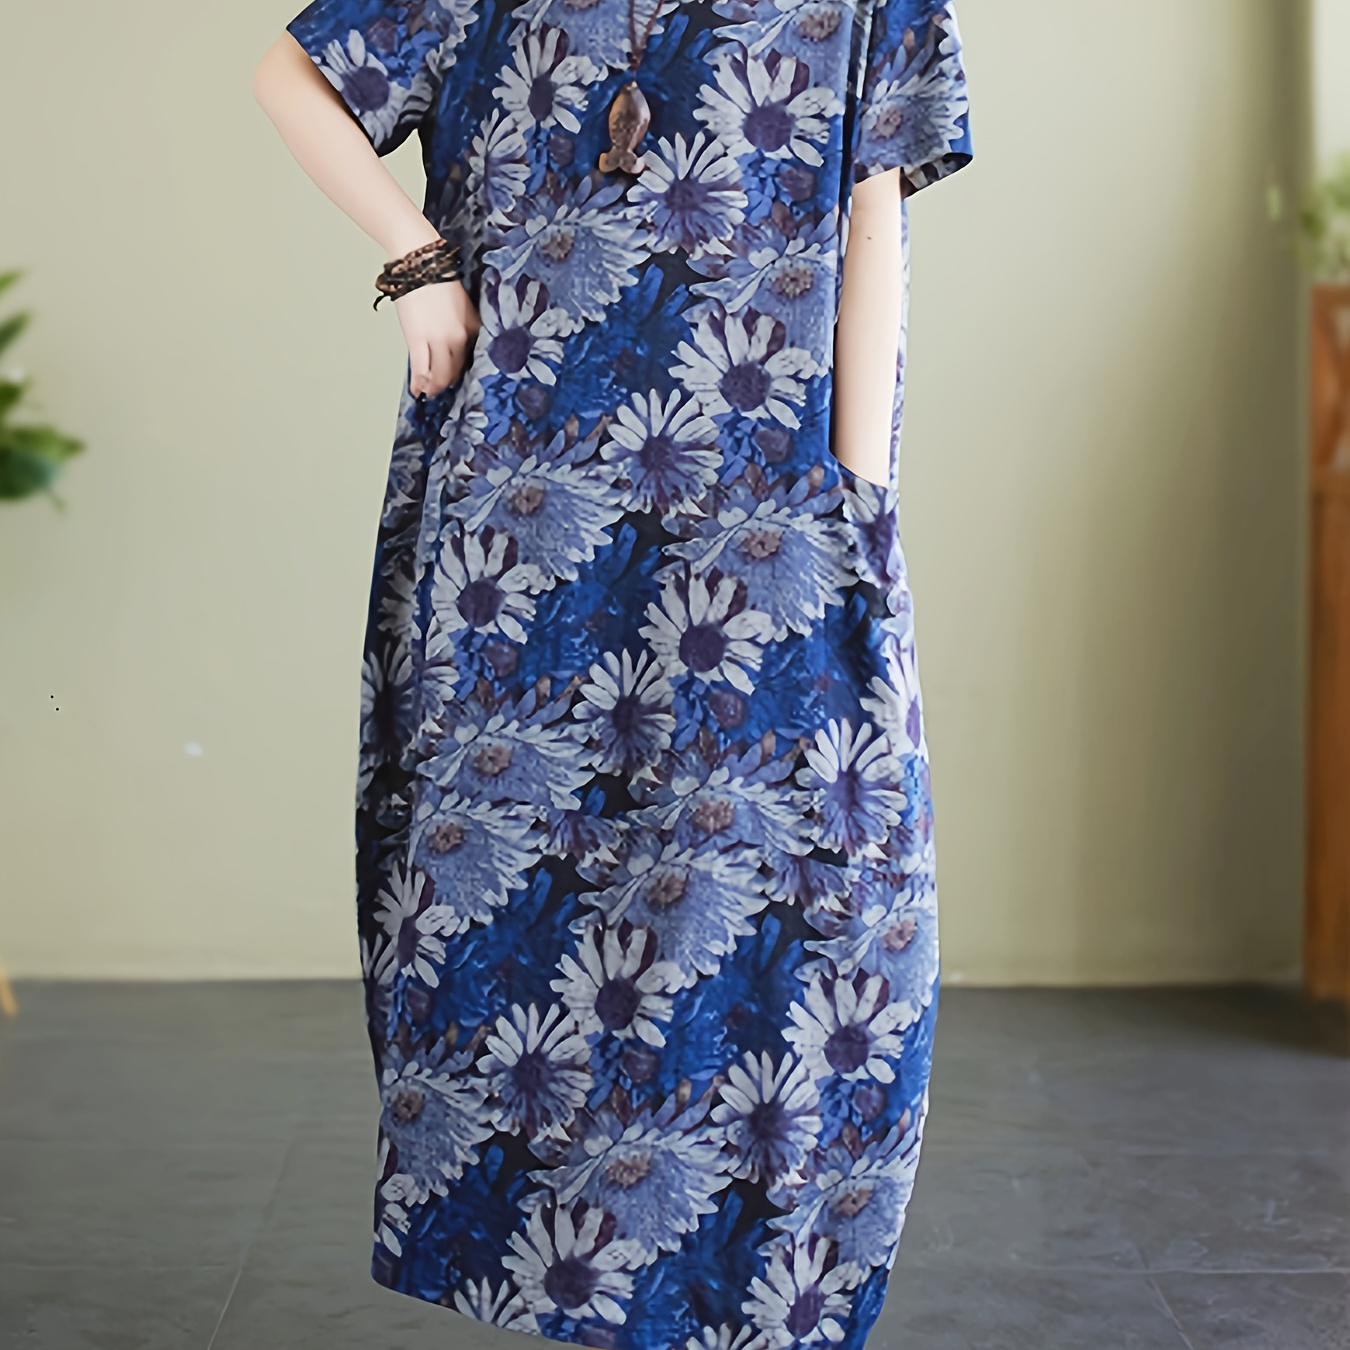 

Floral Print Crew Neck Dress, Elegant Short Sleeve Shift Dress For Spring & Summer, Women's Clothing